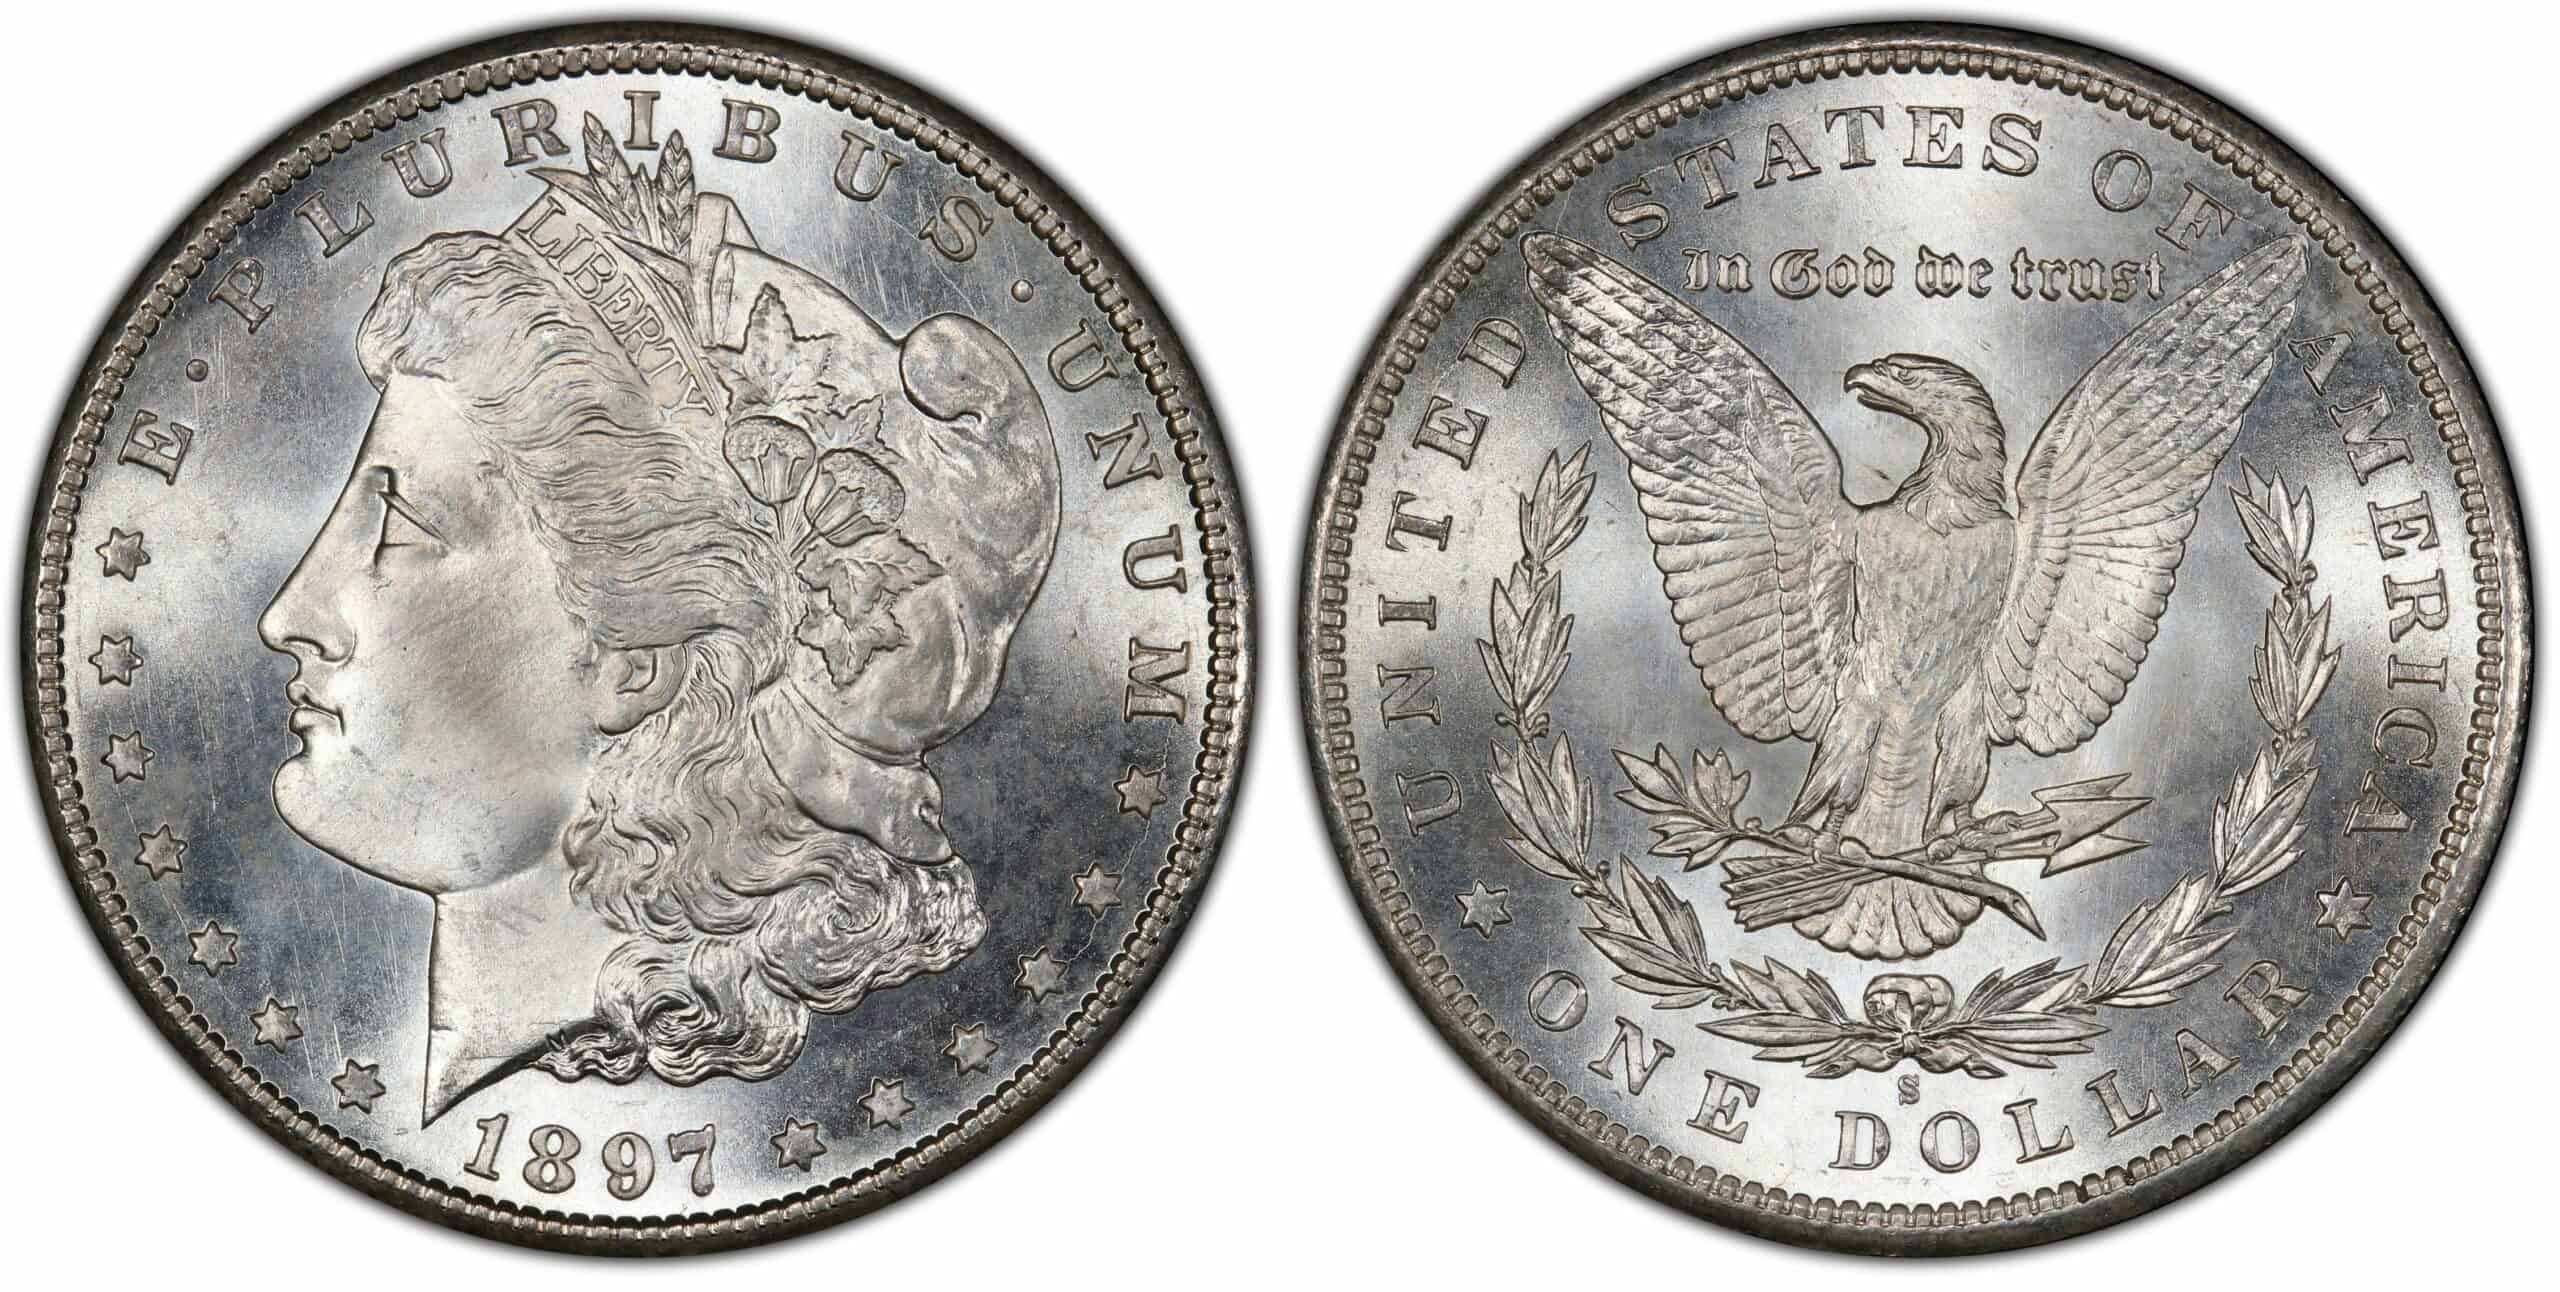 1897 S Silver Dollar Value